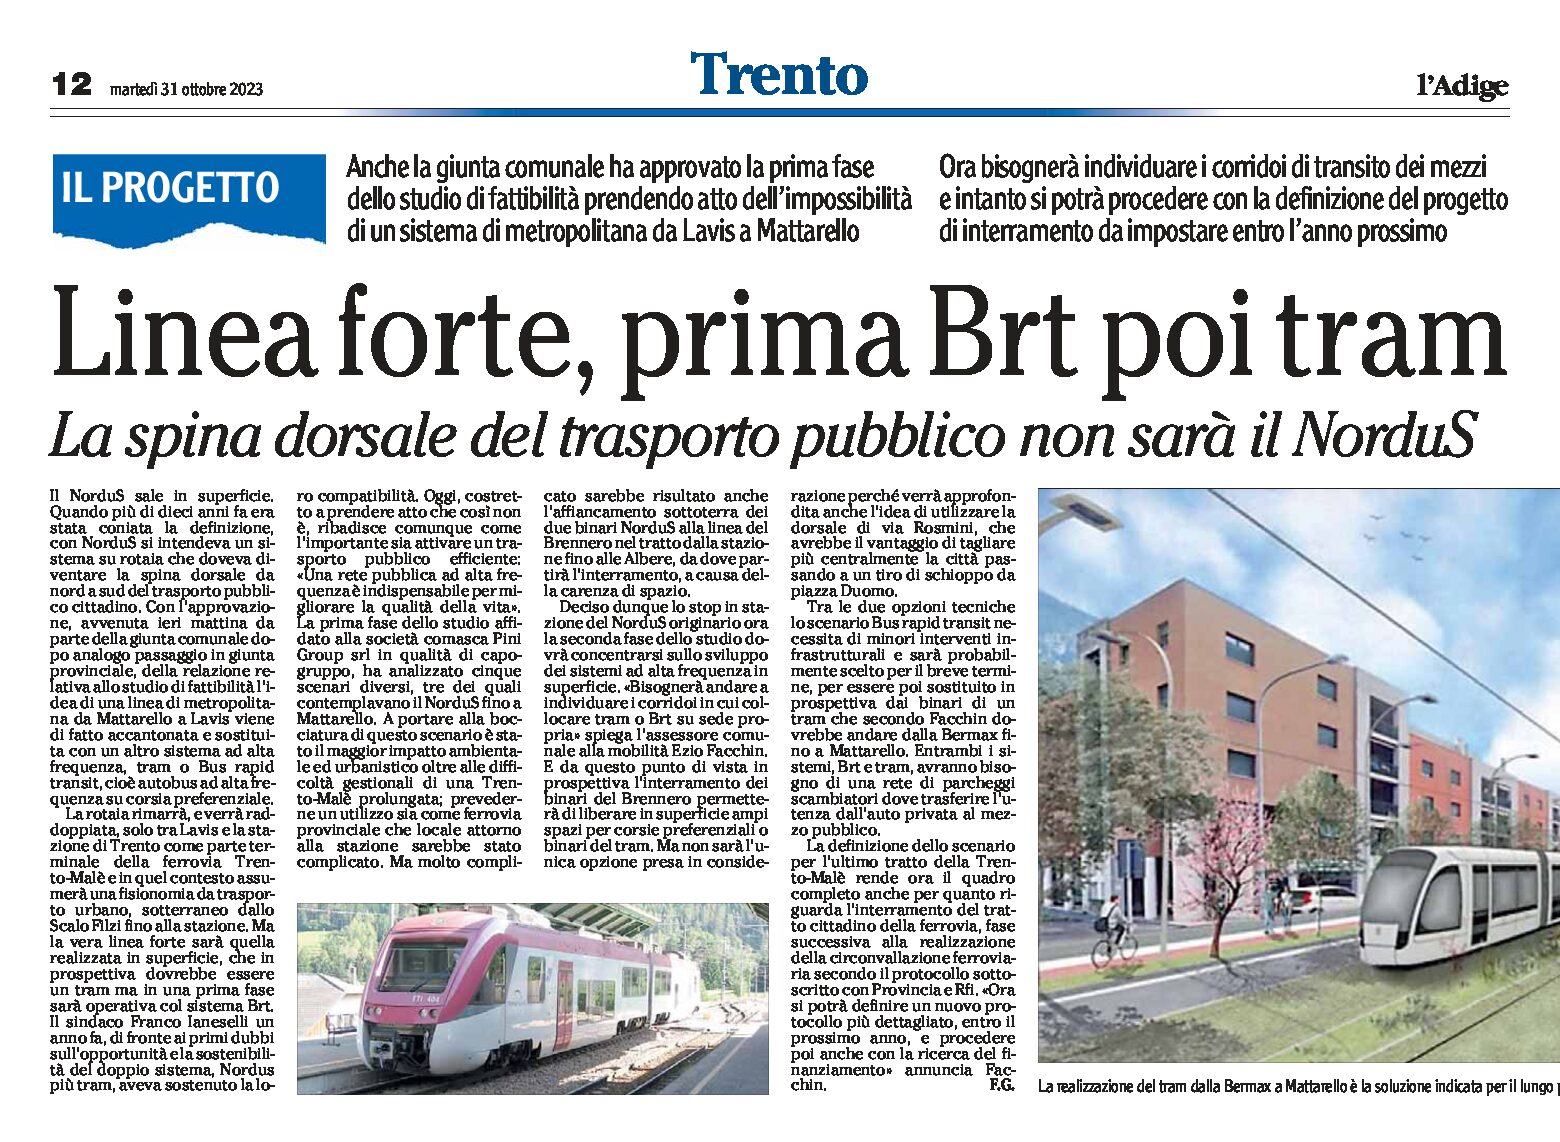 Trento: Linea forte, prima Brt poi tram